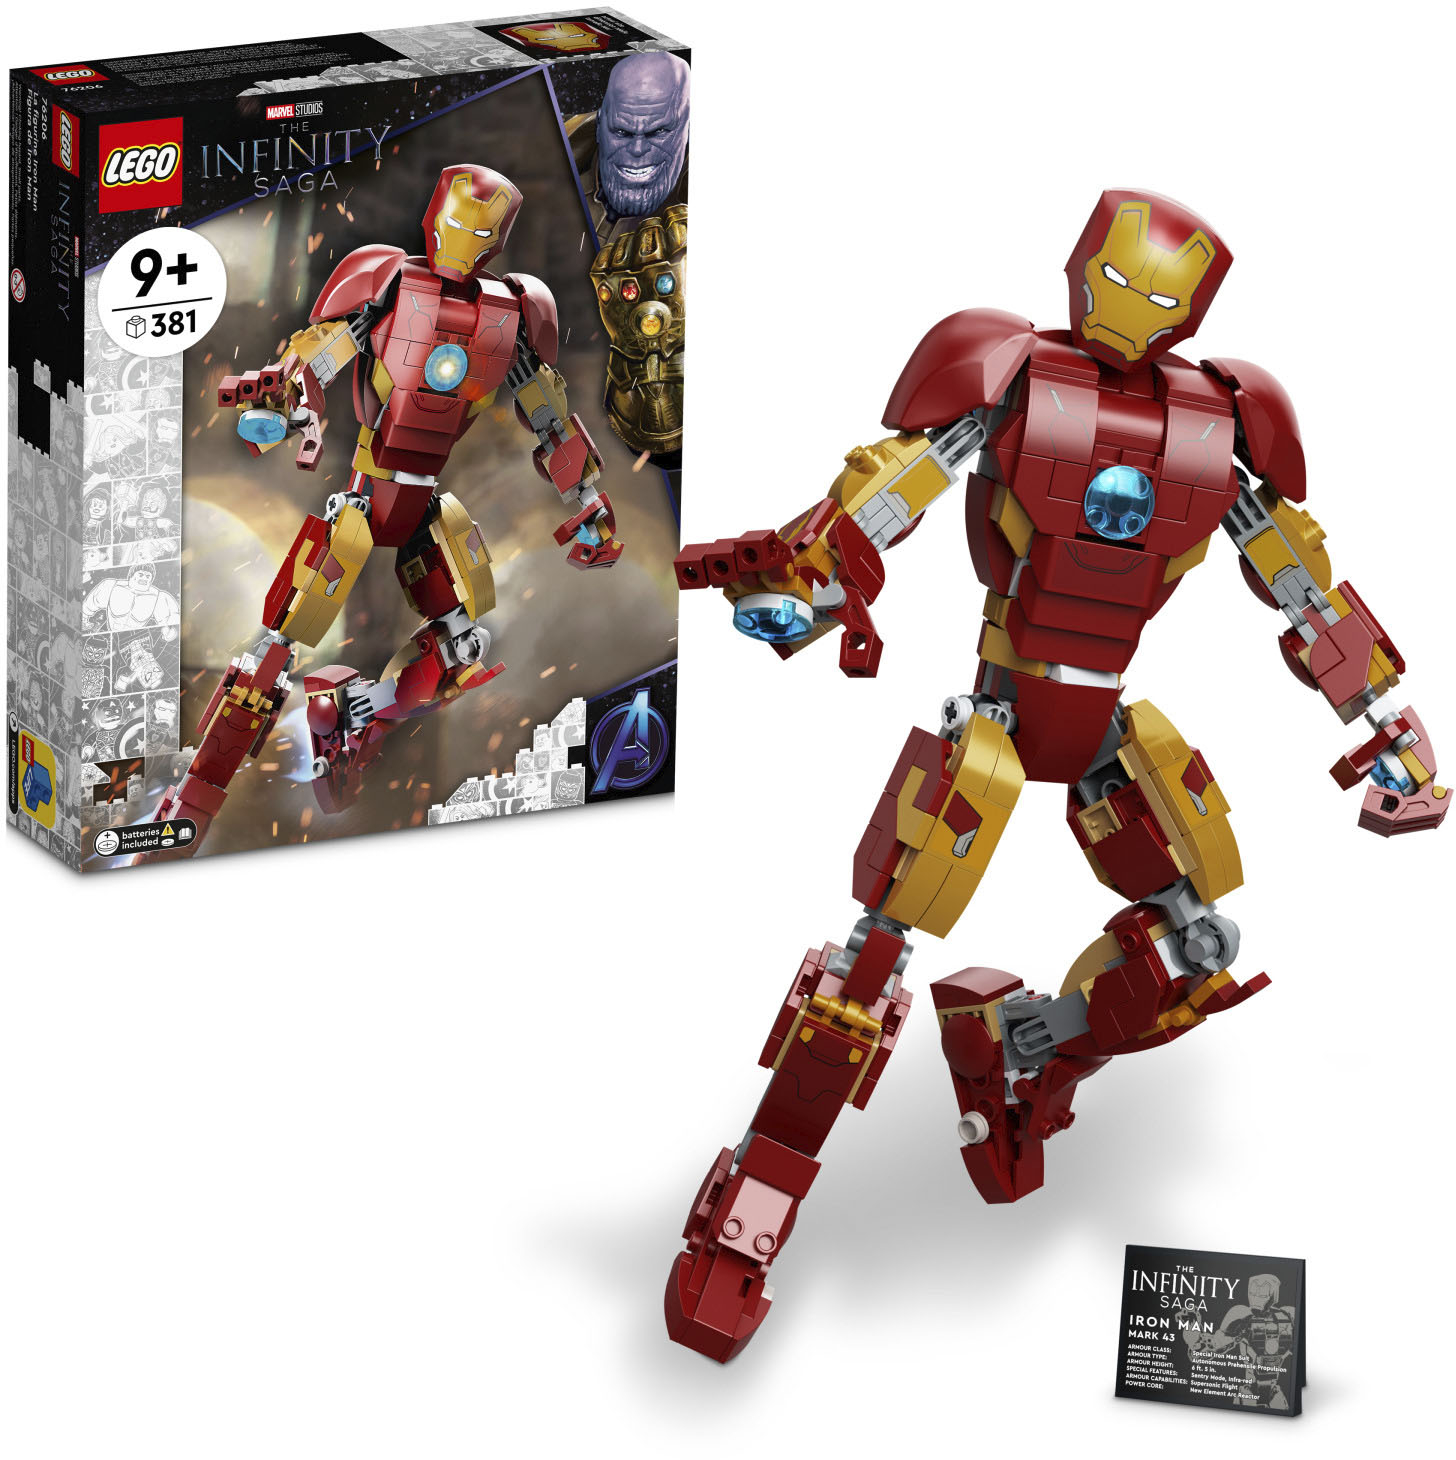 LEGO Marvel Super Heroes Minifigure - Iron Man Tazer Armor - Extra Extra  Bricks